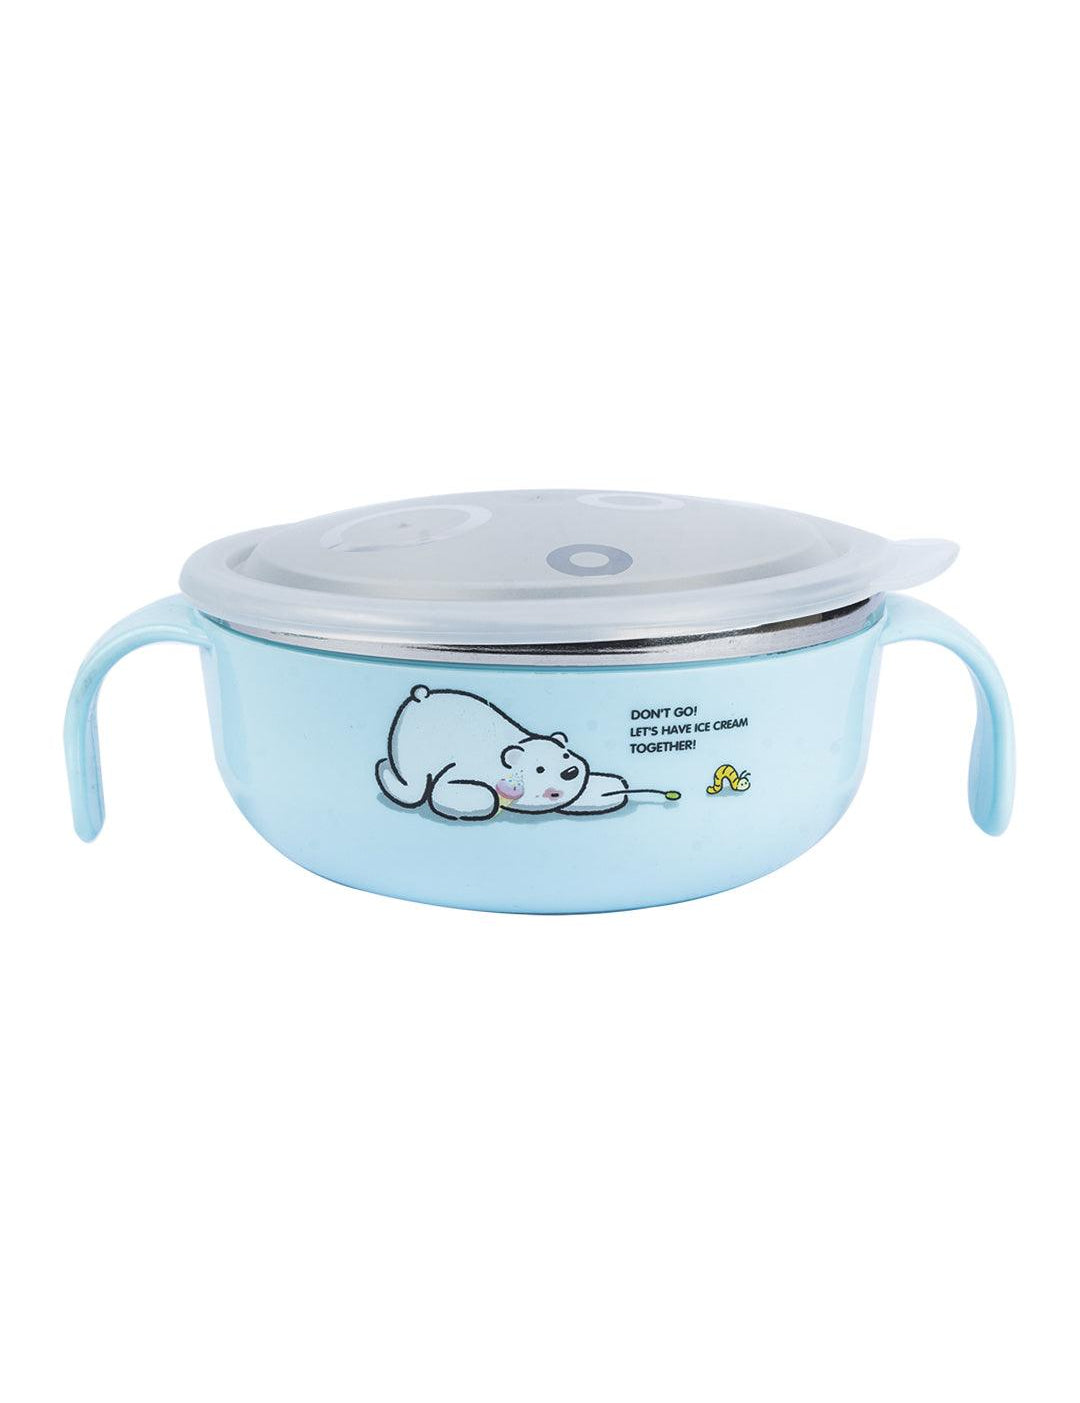 Skyblue Plastic Kids Bowl with Playful Bear Print - 400Ml